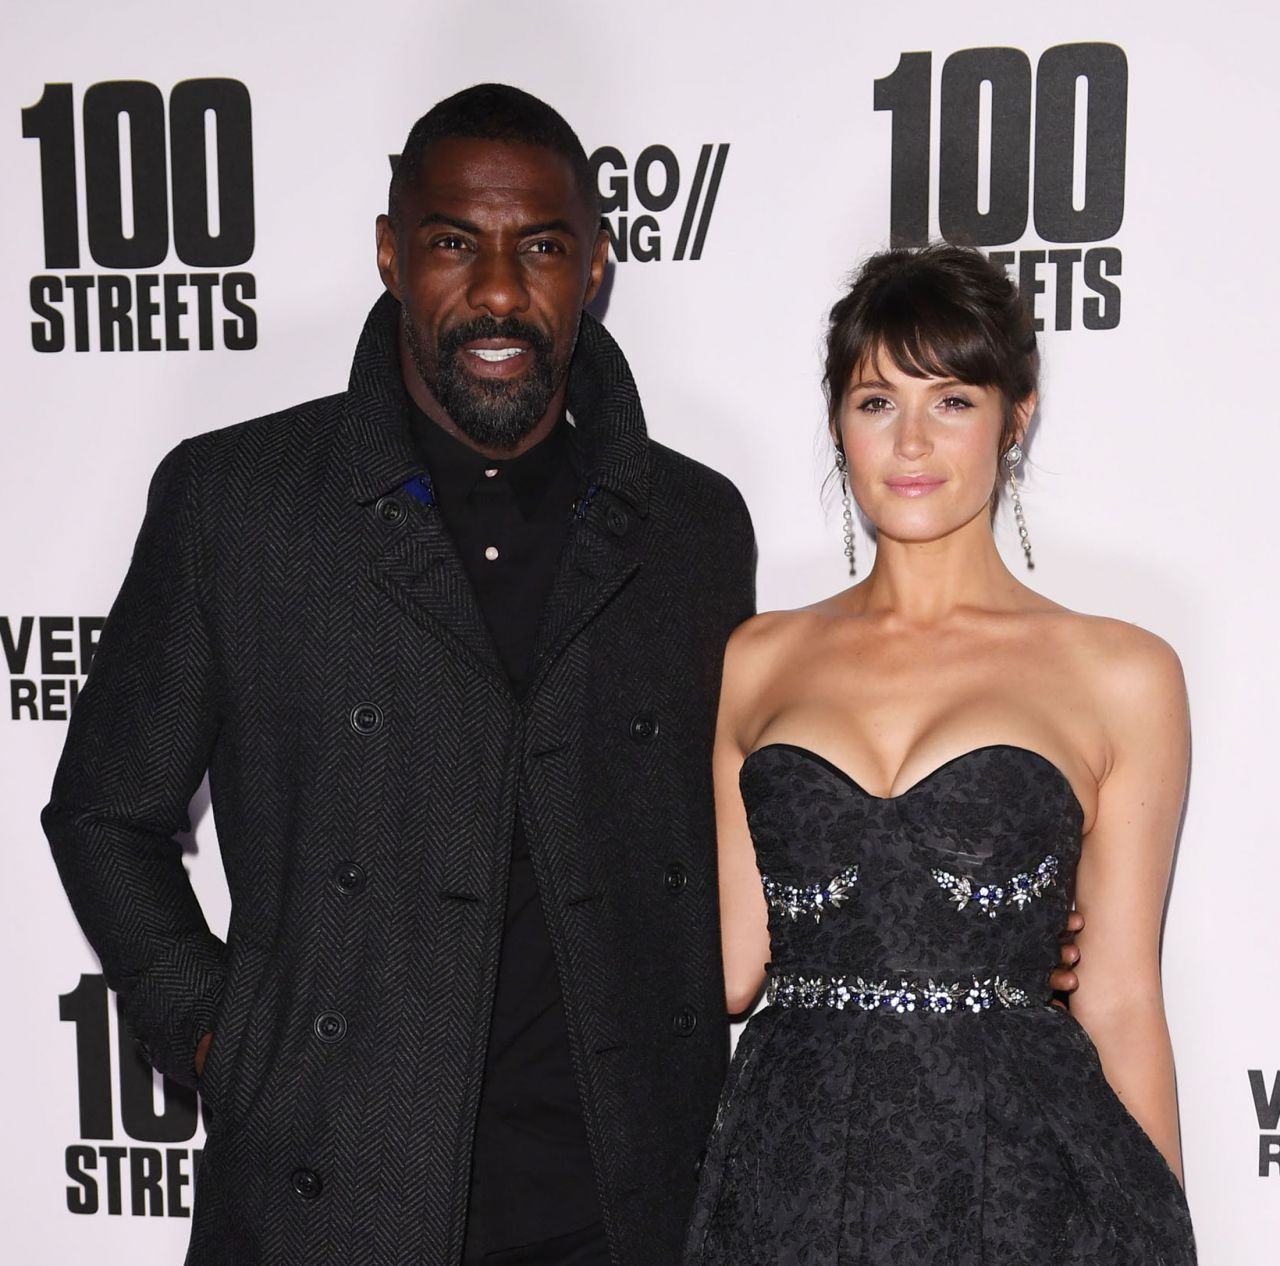 100 Streets | Veja trailer de drama estrelado por Idris Elba